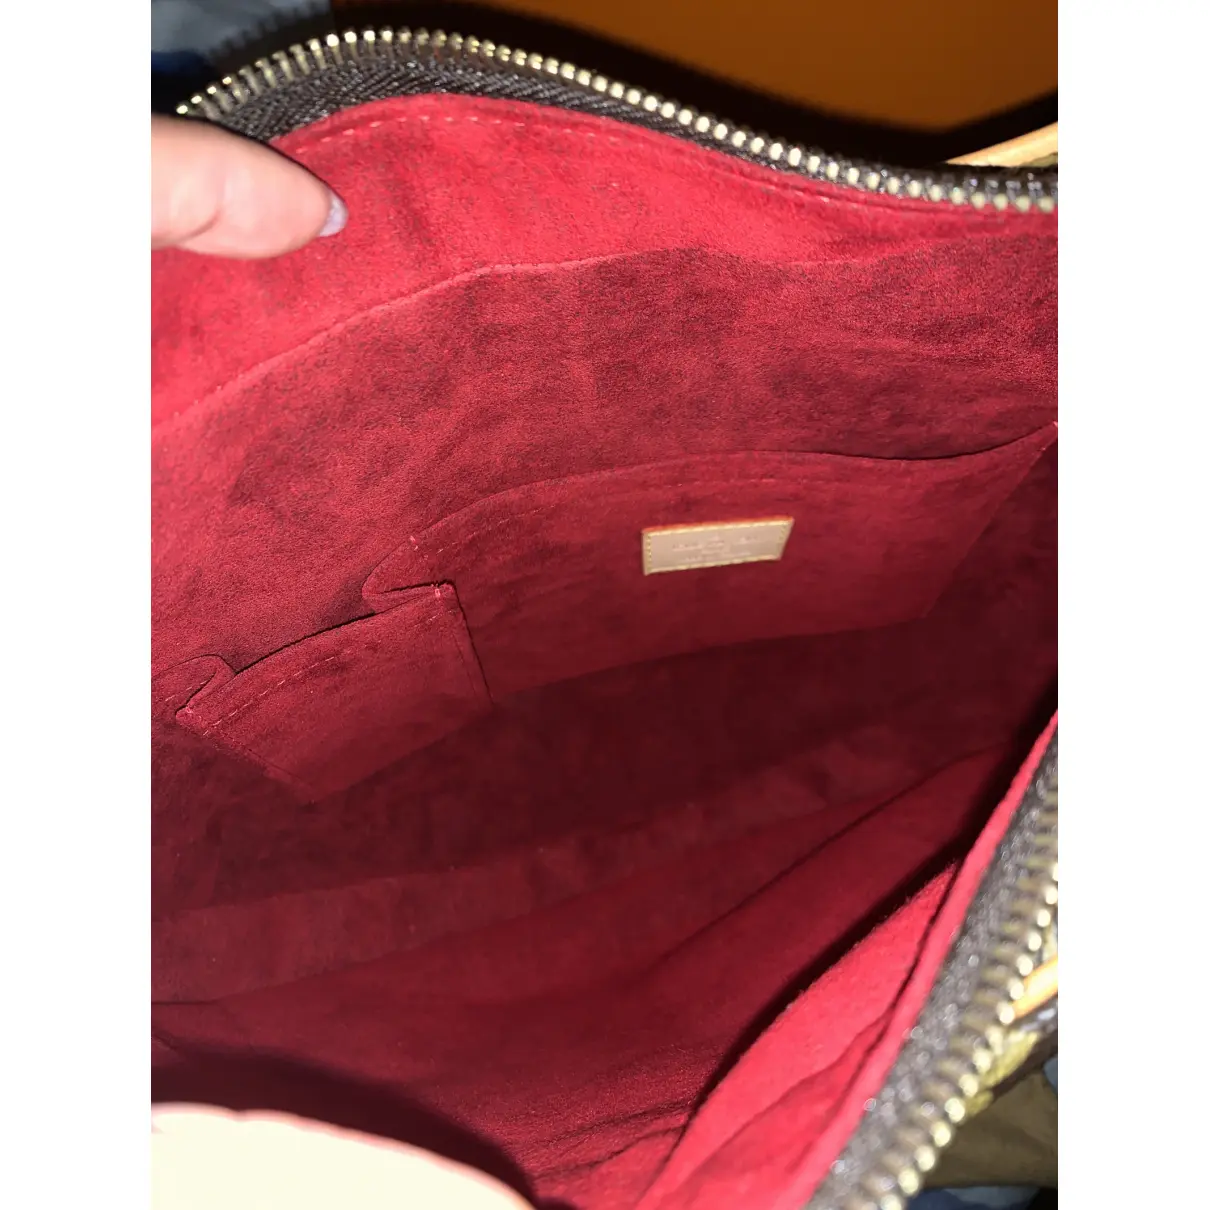 Croissant cloth handbag Louis Vuitton